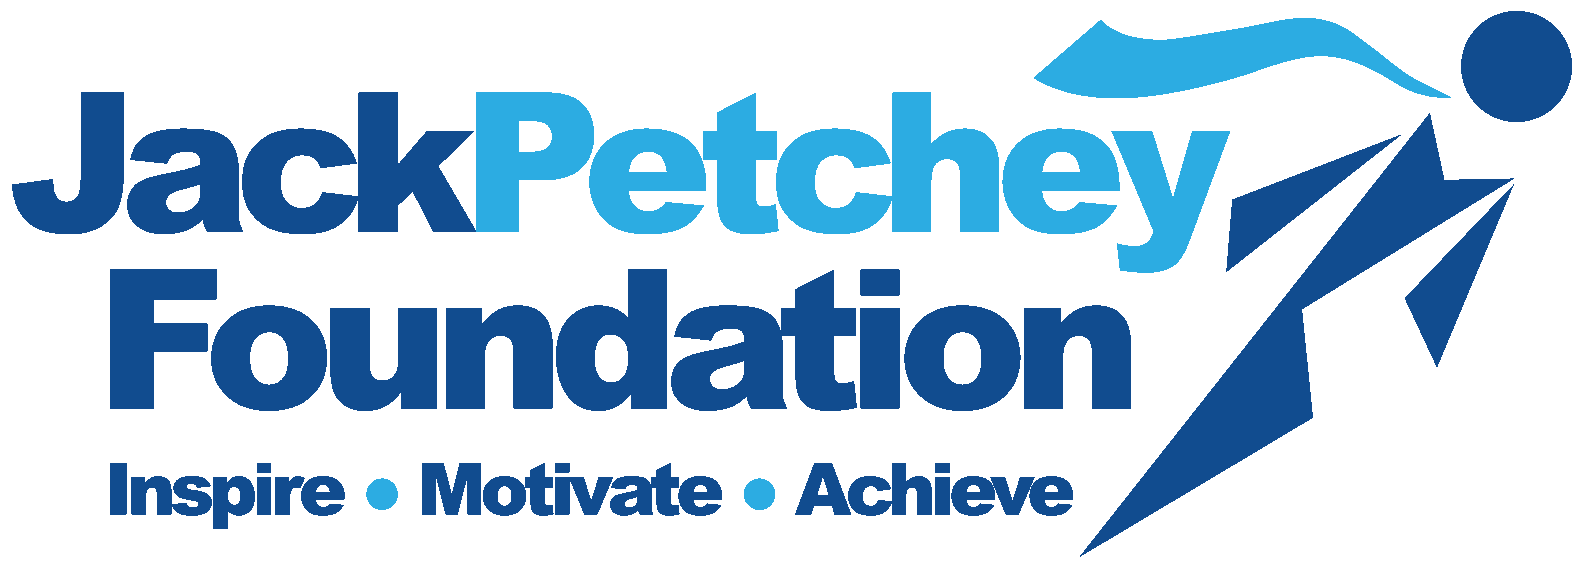 The Jack Petchey Foundation